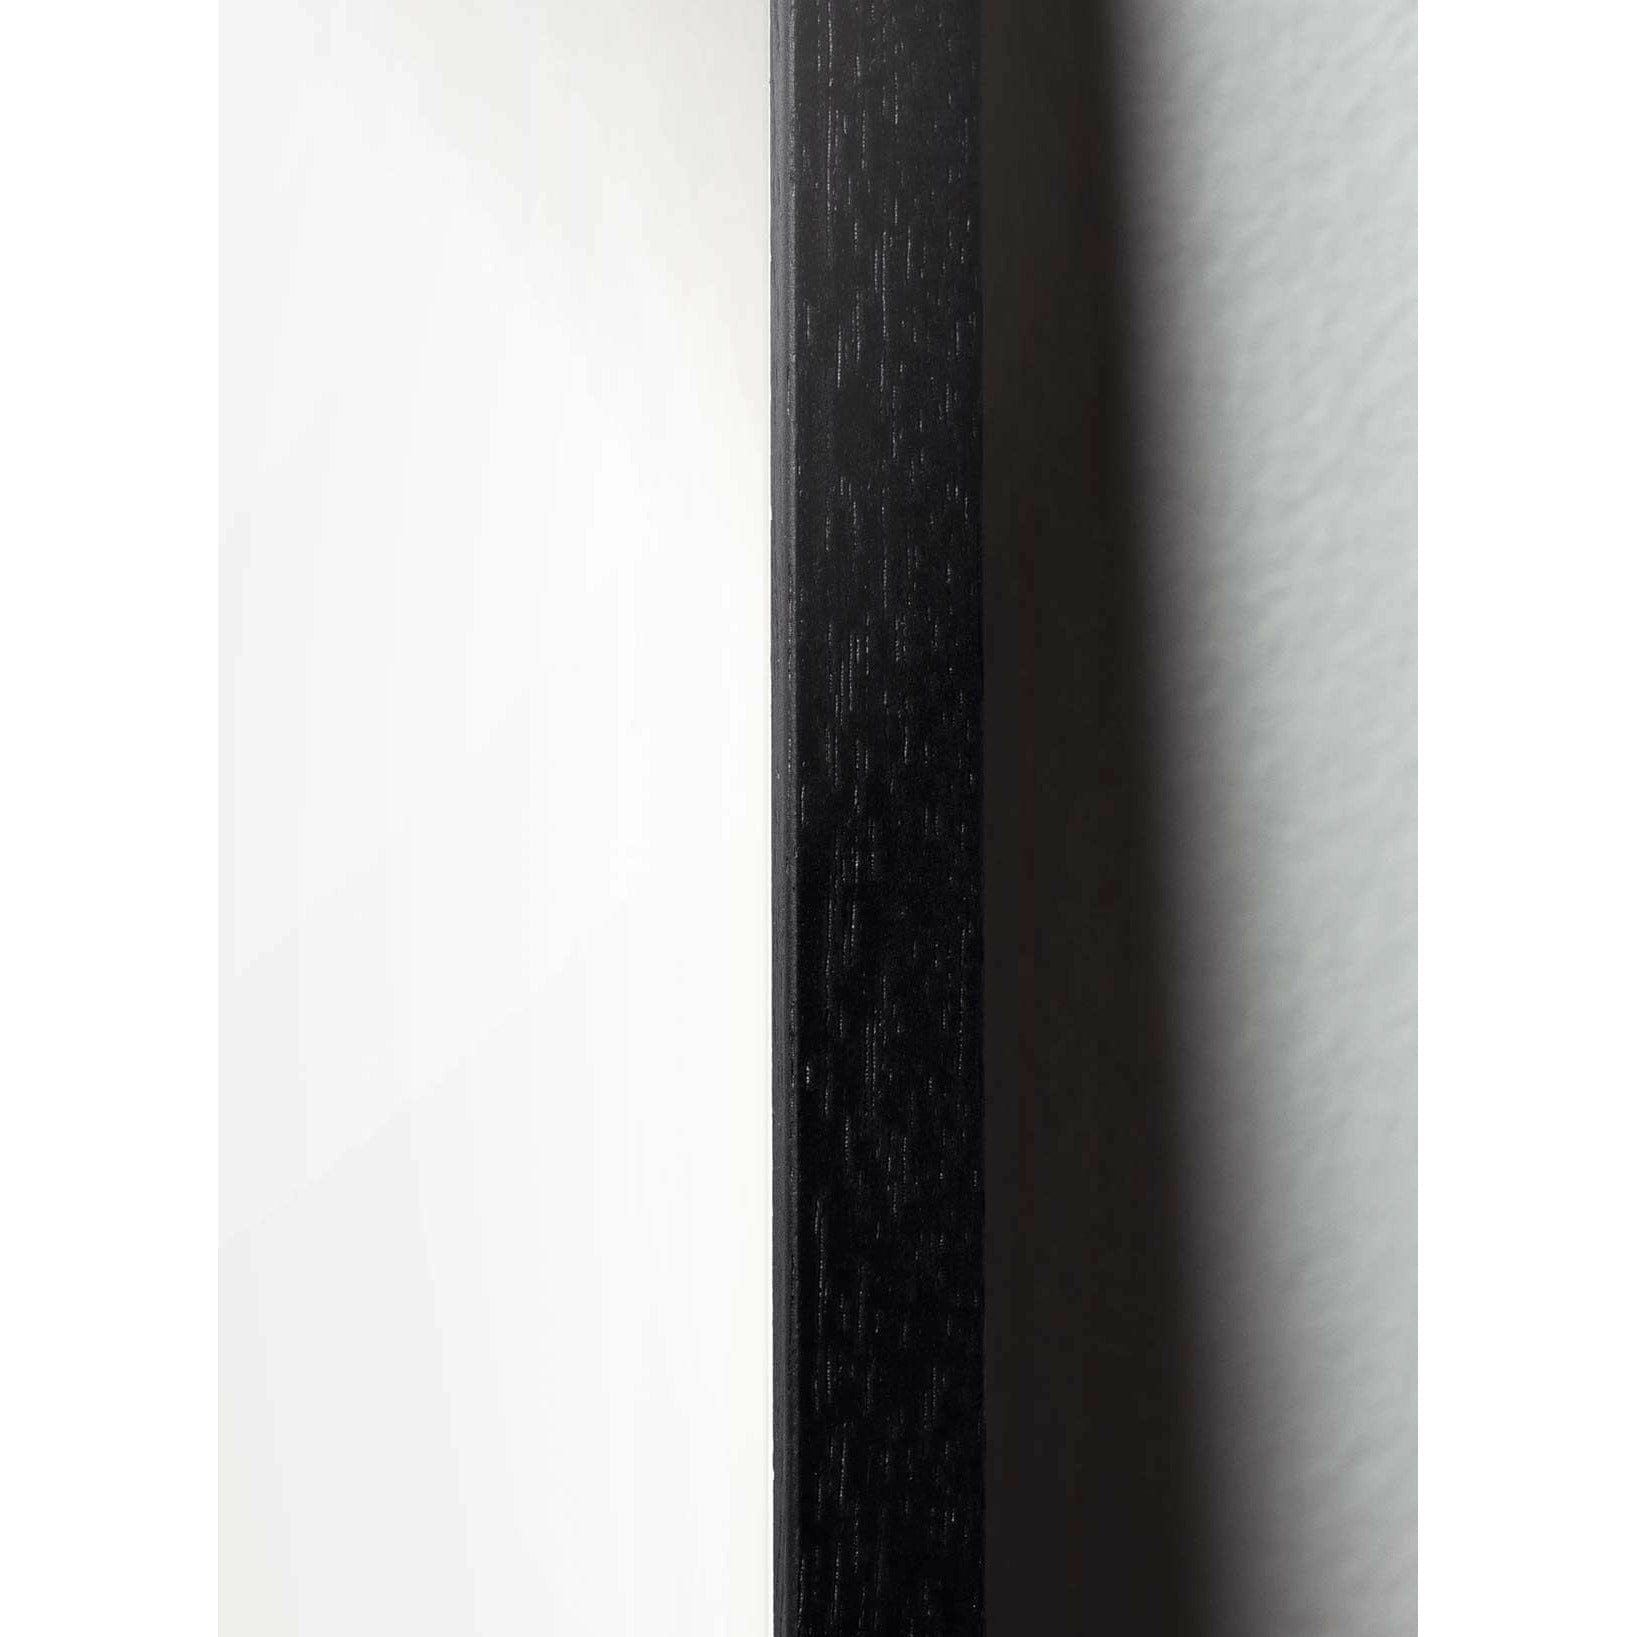 Brainchild Släpp klassisk affisch, ram i svart -målat trä 50x70 cm, sandfärgad bakgrund